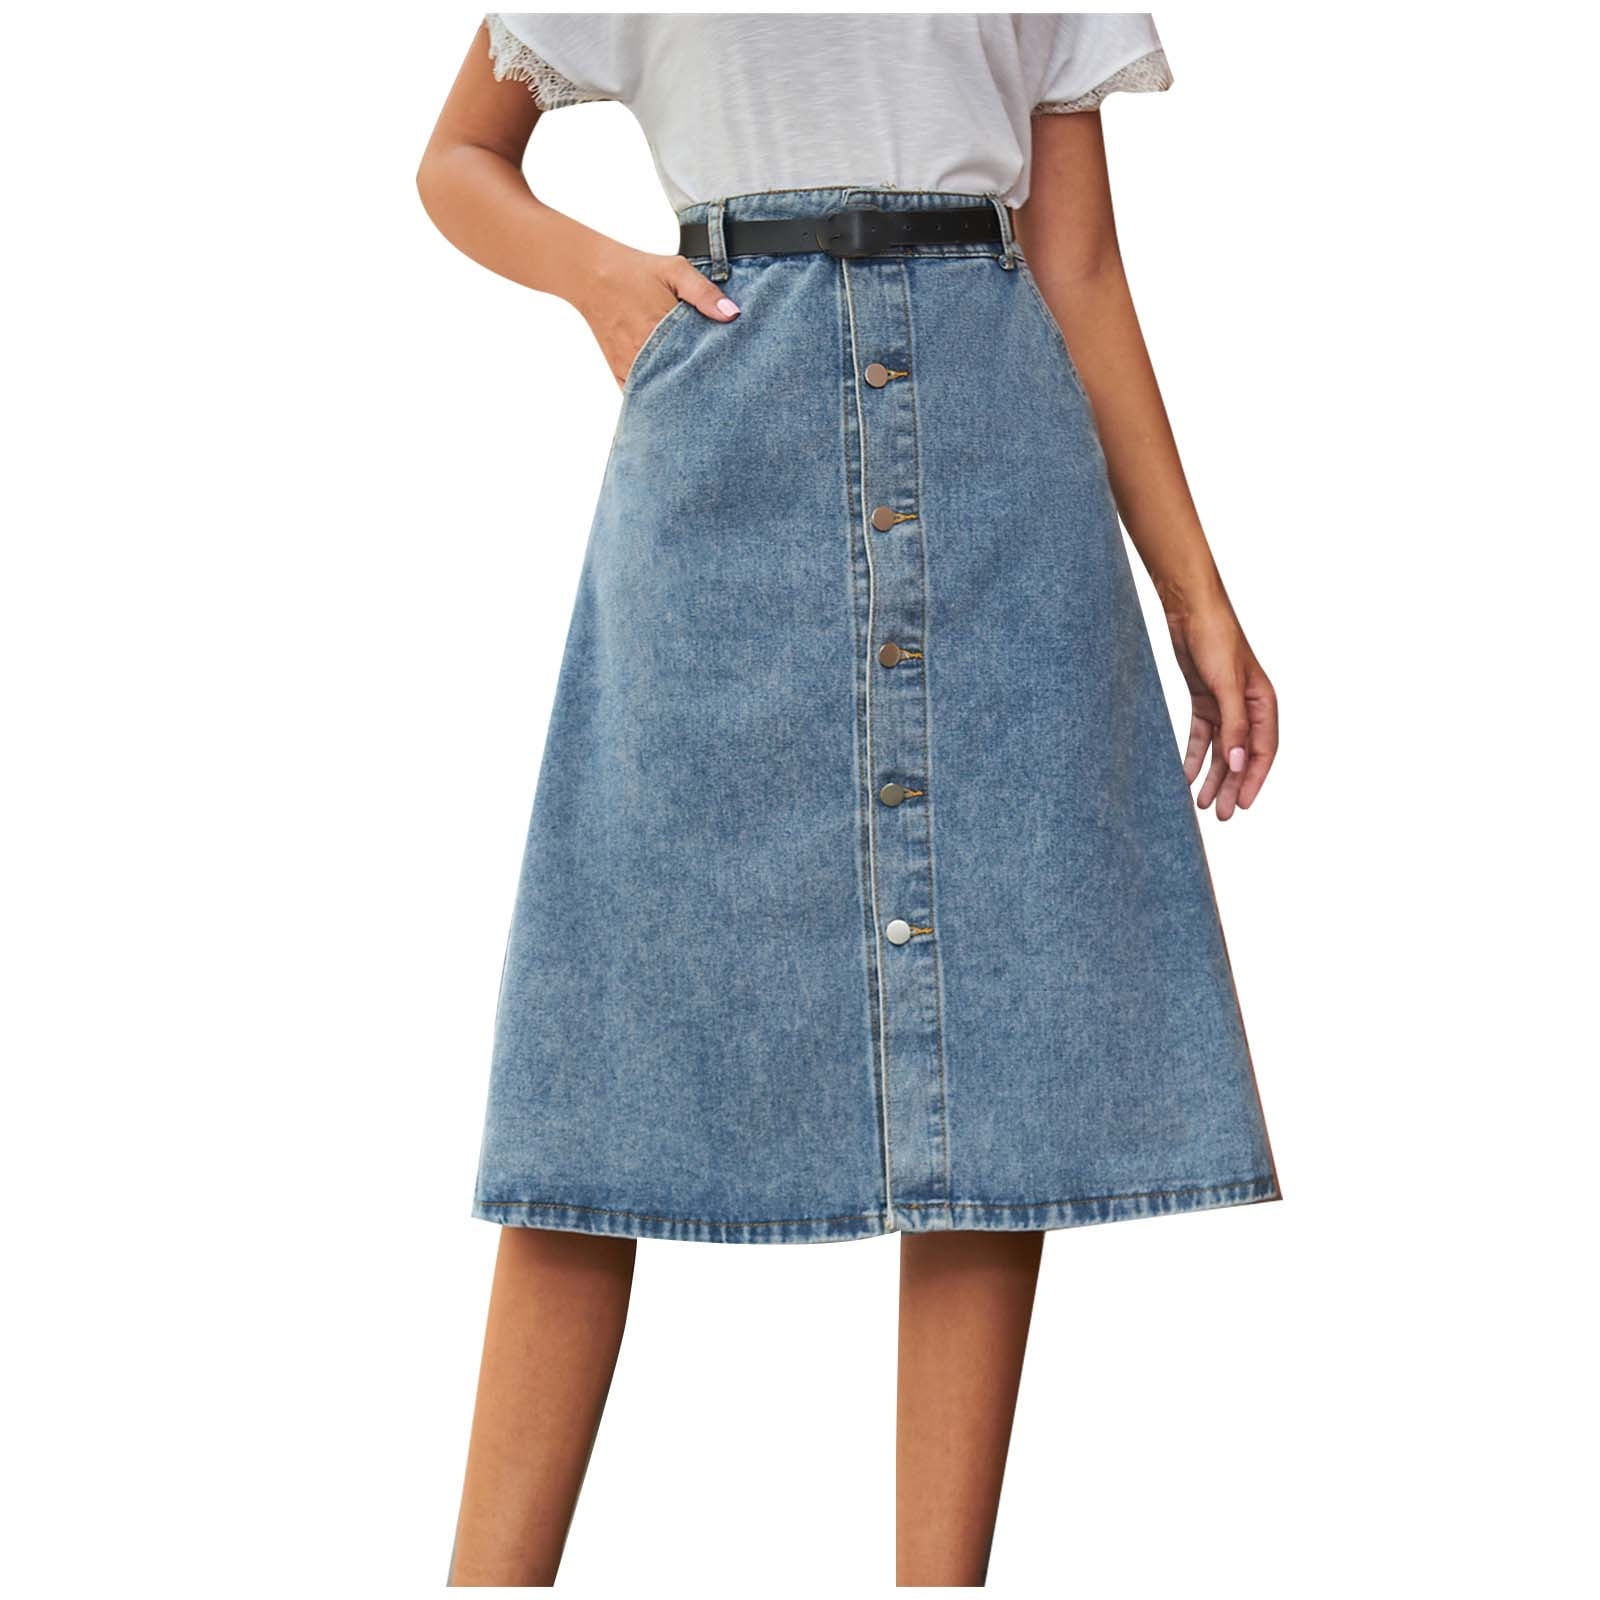 OGLCCG Women's A-Line Denim Midi Skirt High Waist Button Front Flared Jean  Skirt Casual Swing Skirt with Pockets 